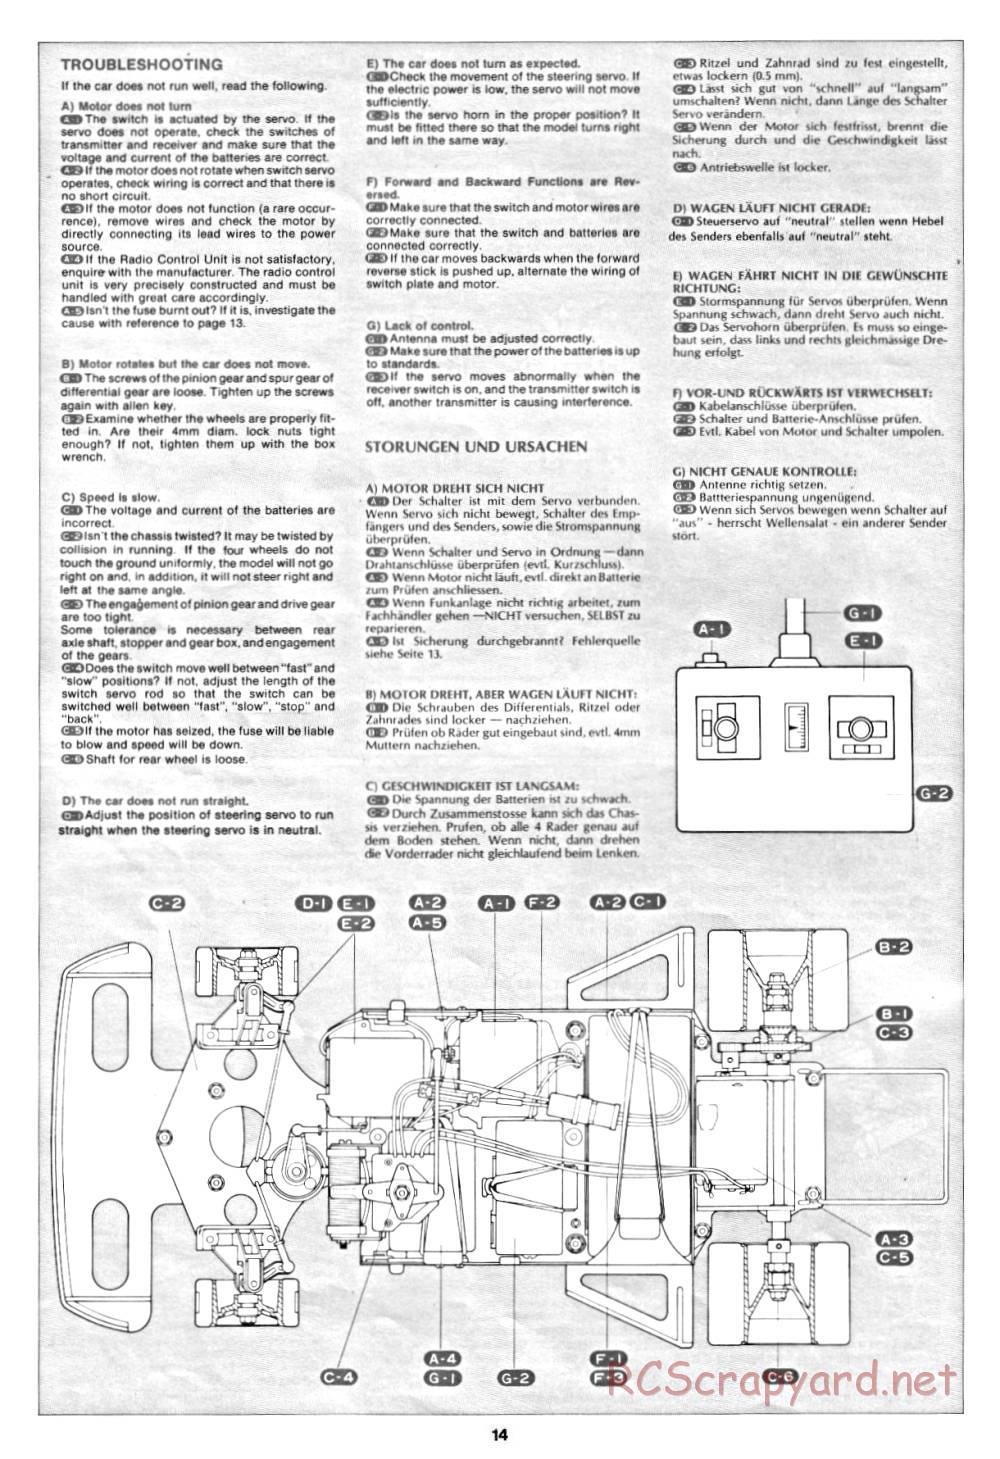 Tamiya - JPS Lotus 79 (CS) - 58020 - Manual - Page 14